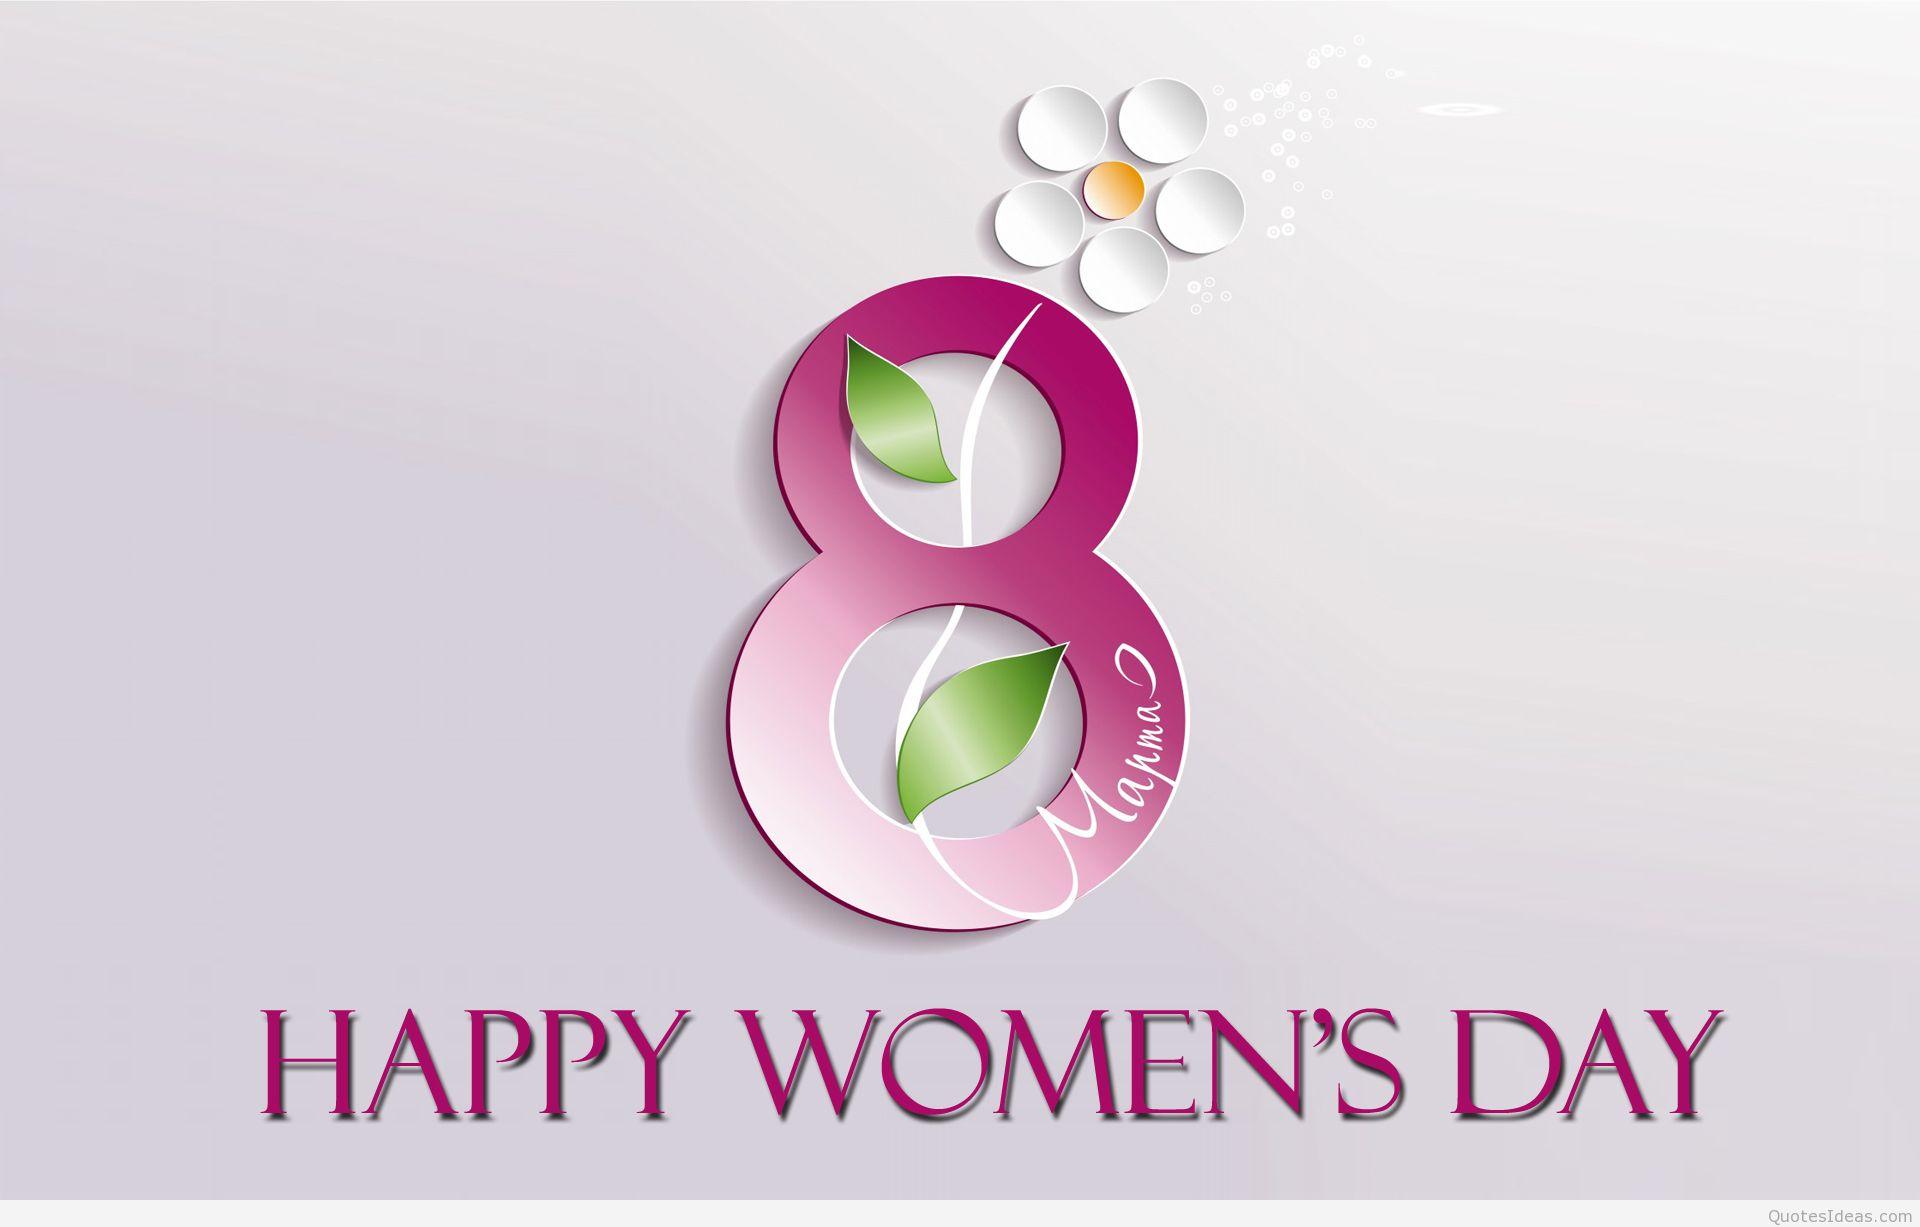 Women's Day Wallpaper HD free download